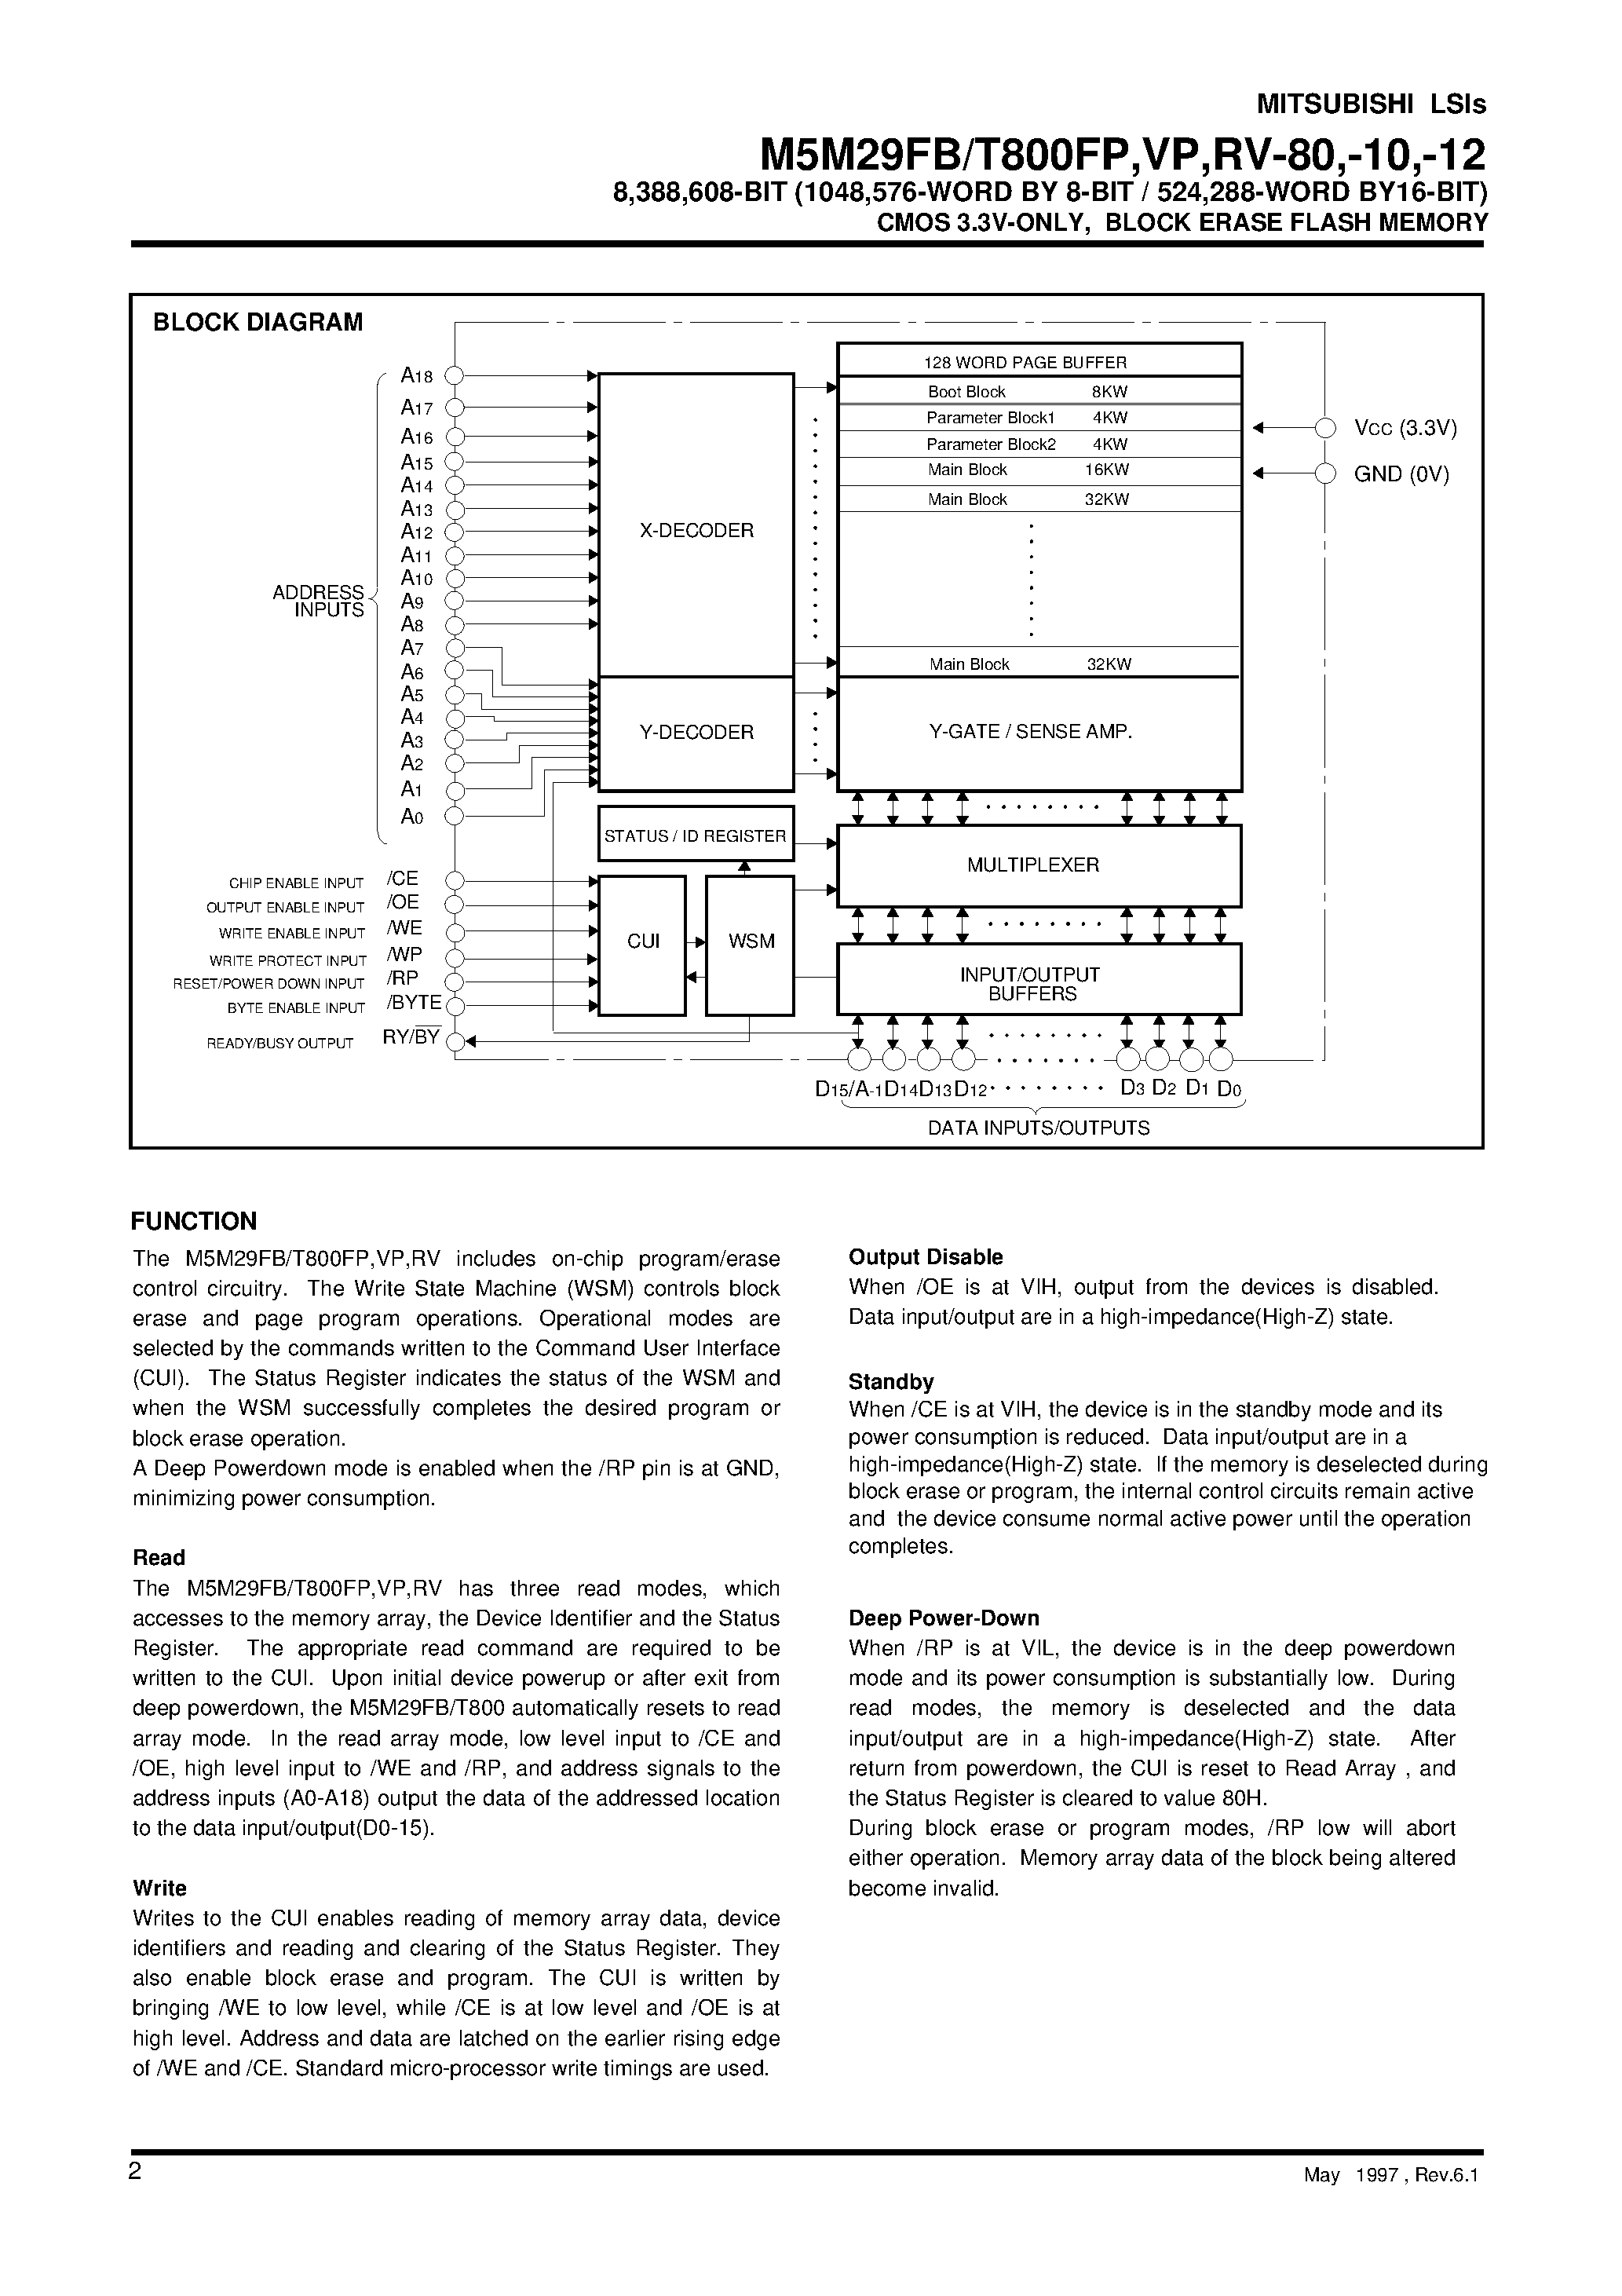 Datasheet M5M29FT800VP - 8 /388 /608-BIT (1048 /576-576-WORD BY 8-BIT / 524 /288-WORD BY16-BIT)CMOS 3.3V-ONLY / BLOCK ERASE FLASH MEMORY page 2